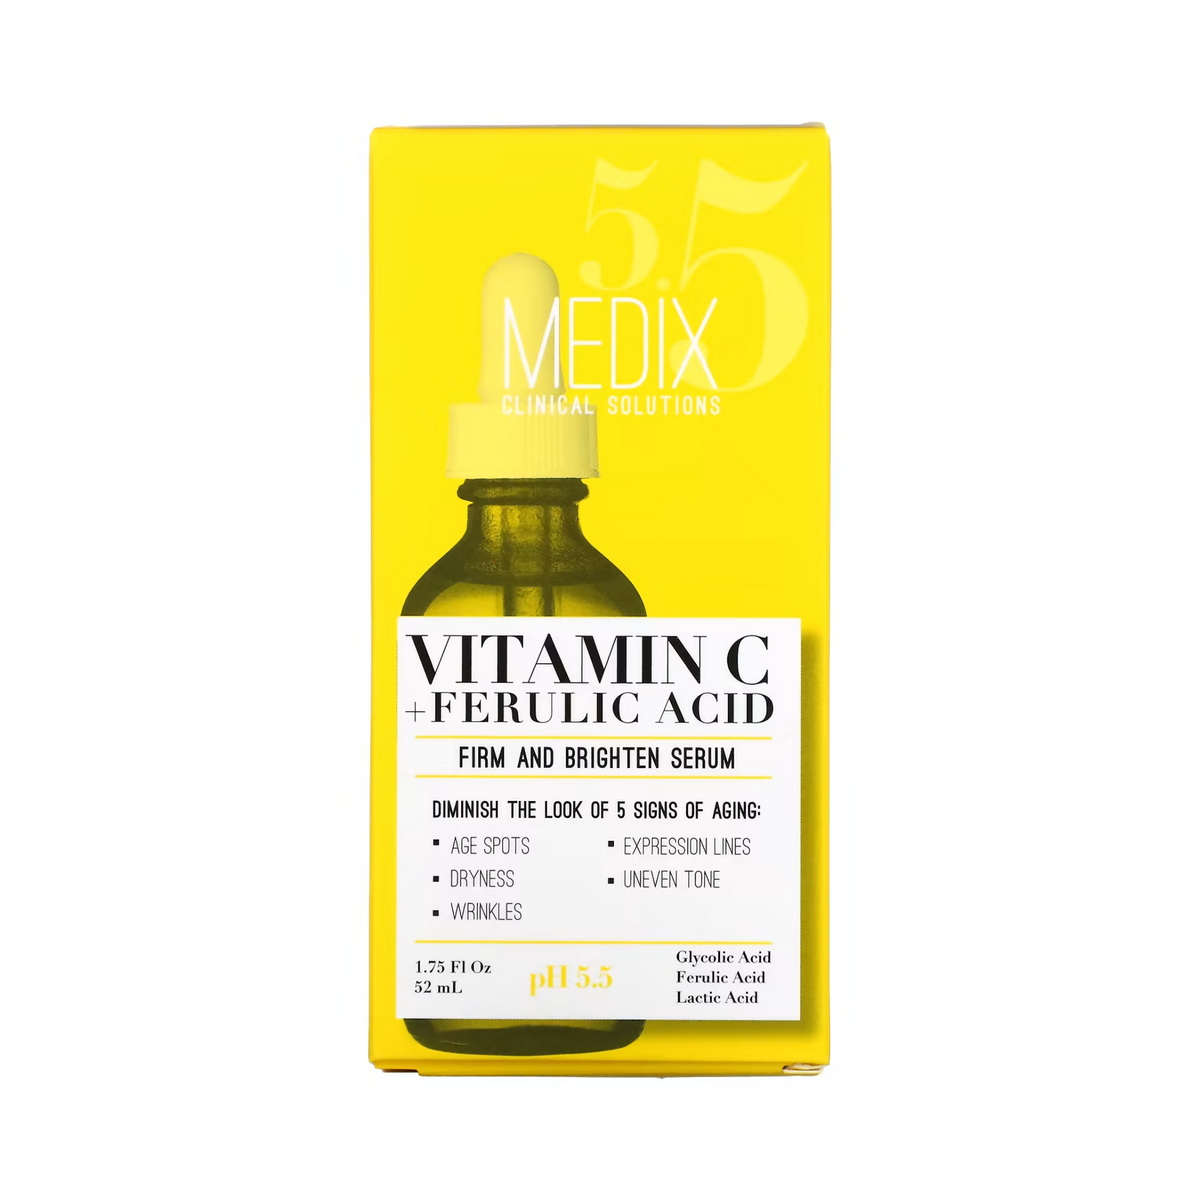 Vitamin C + Ferulic Acid Firm and Brighten Serum